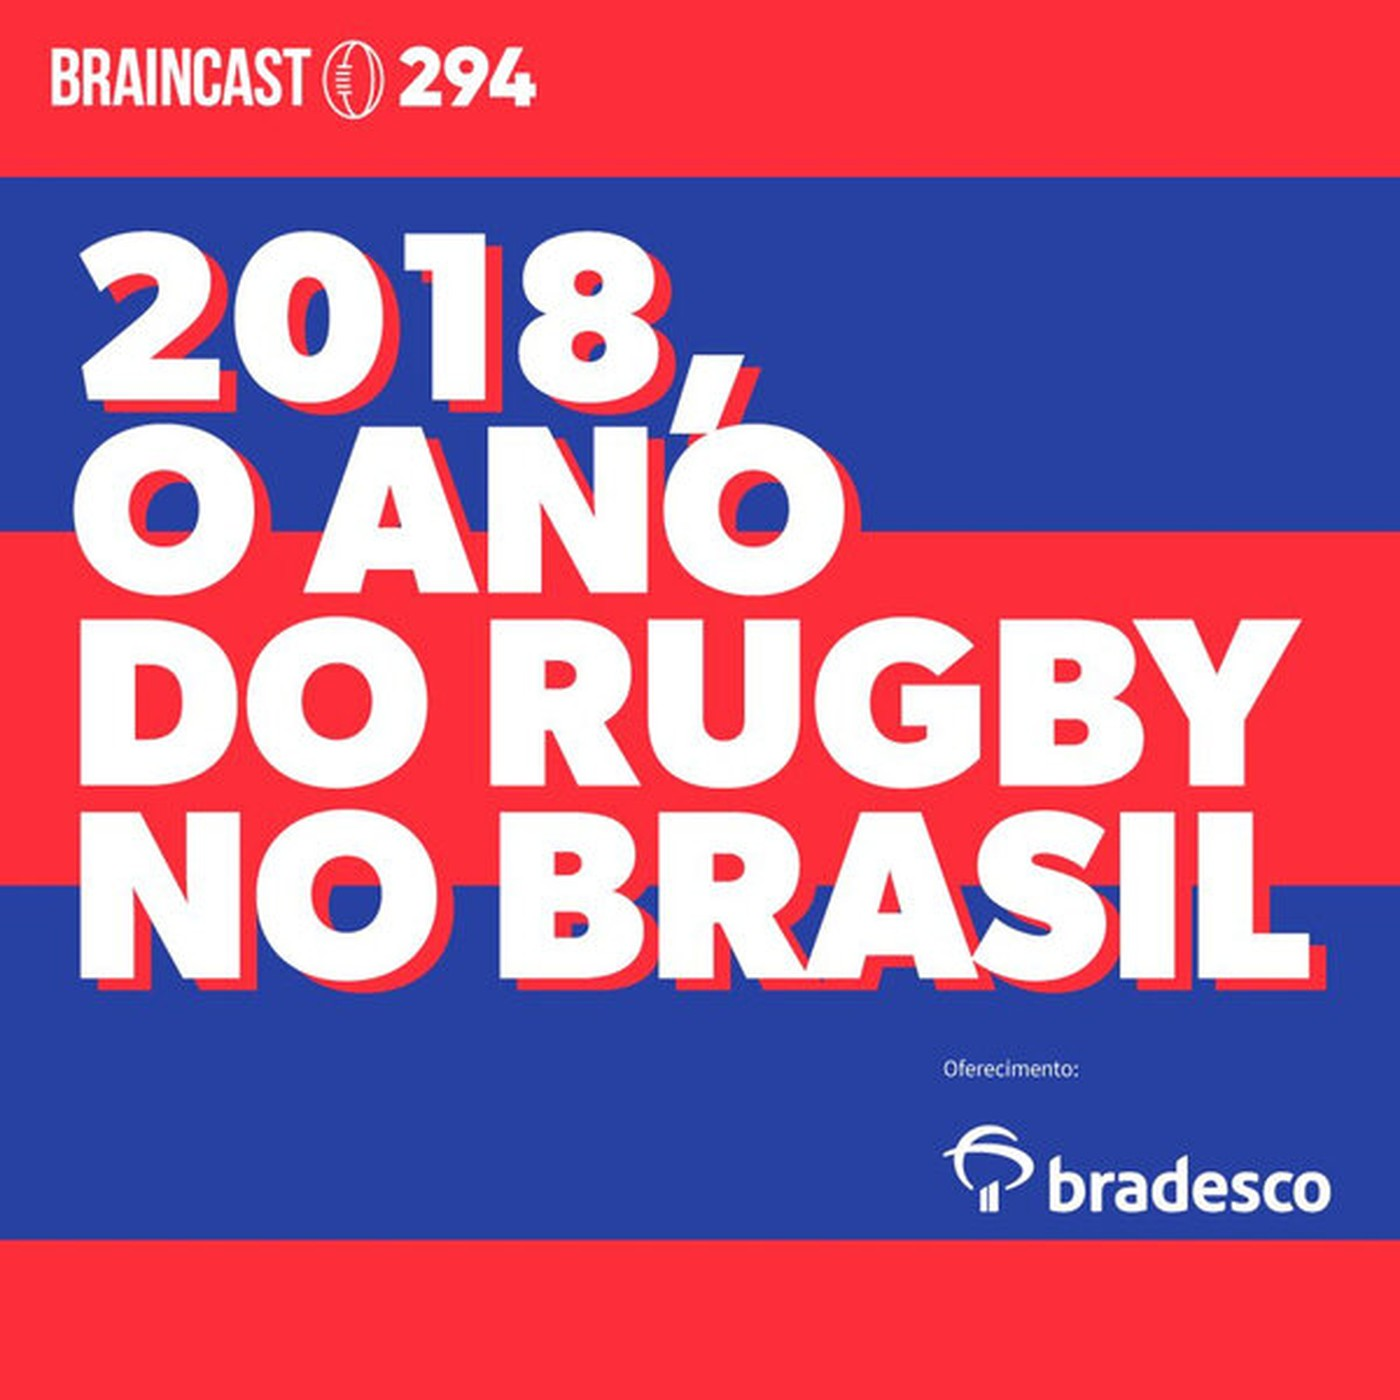 2018, o ano do Rugby no Brasil